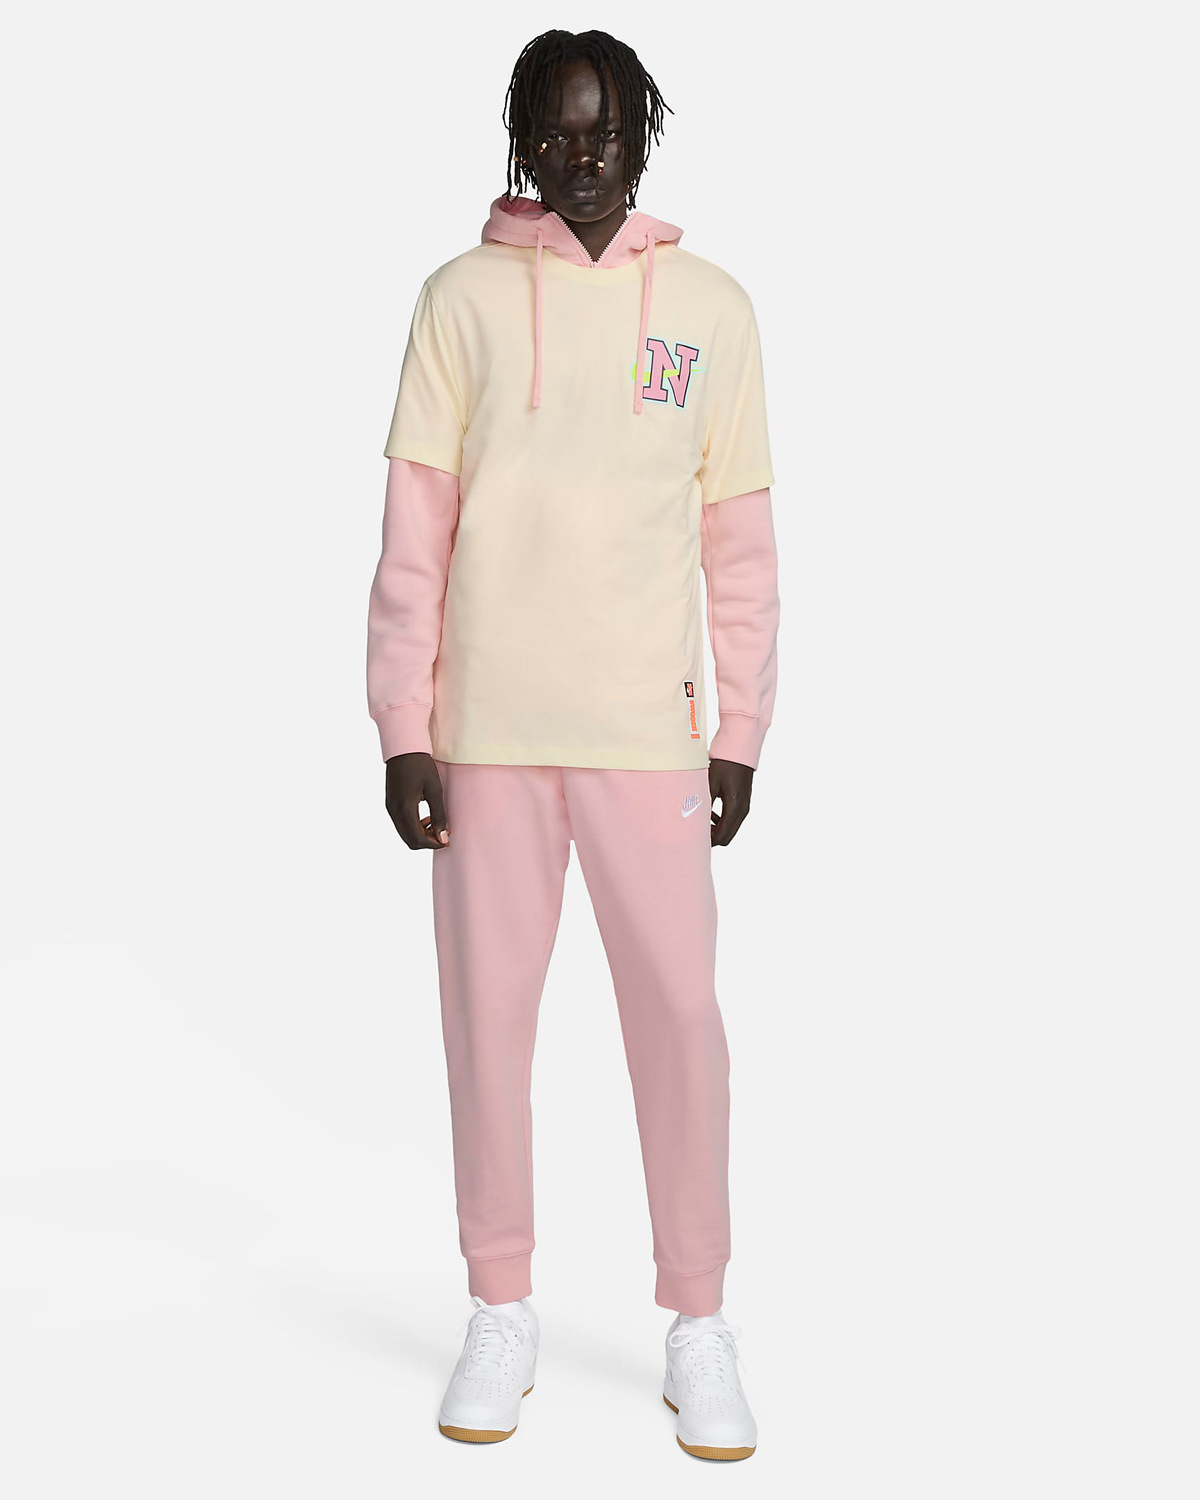 Nike-Sportswear-T-Shirt-Coconut-Milk-Pink-Outfit